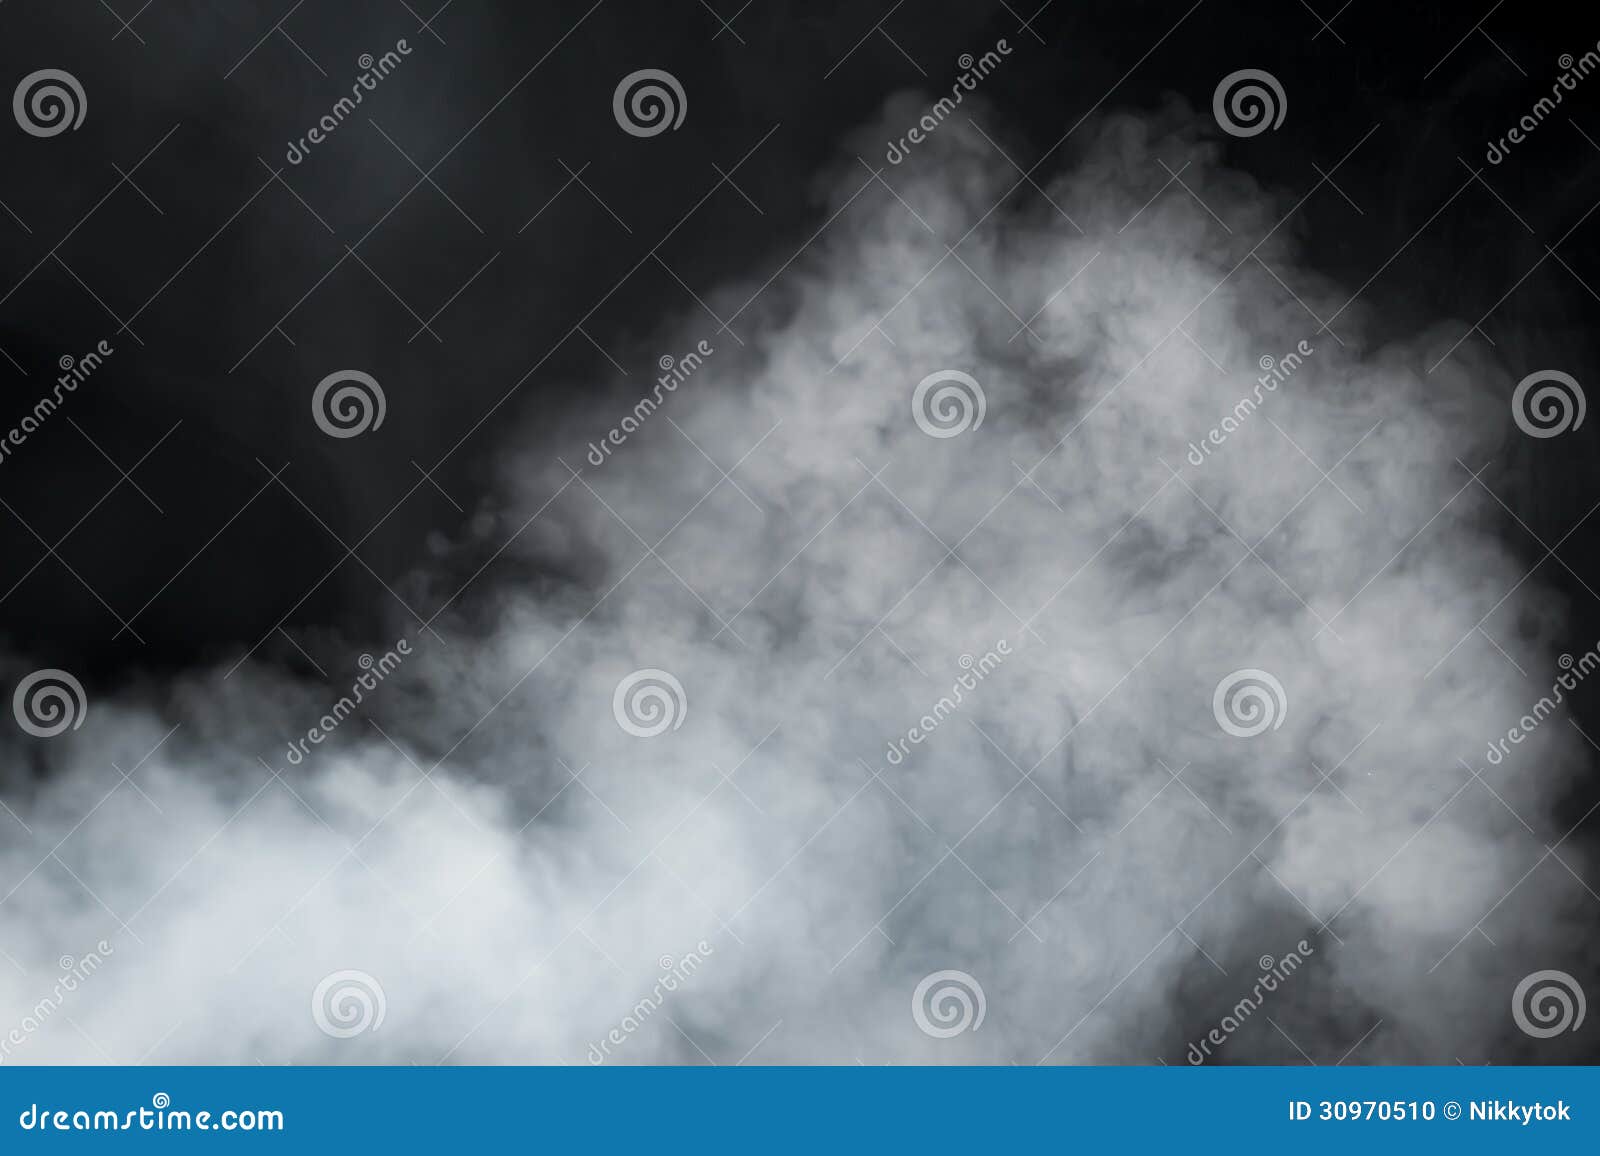 dense smoke background